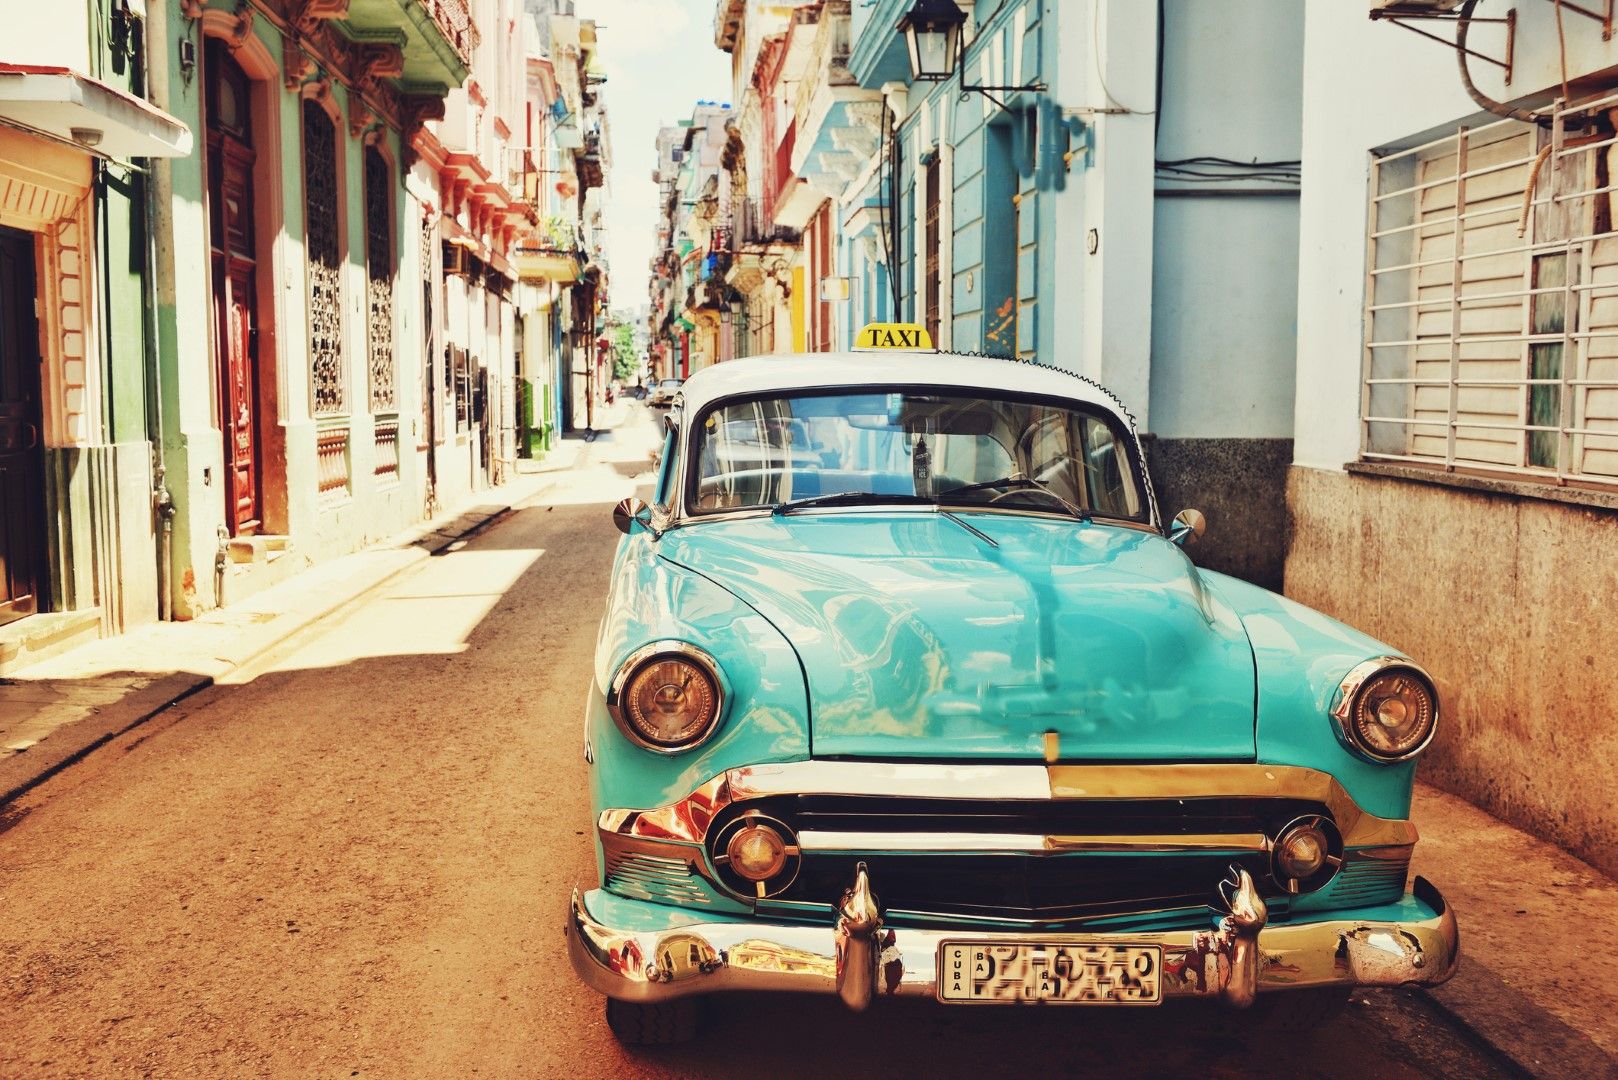 Стара кола и стари сгради - това фотографско клише за Куба е всъщност самата реалност.